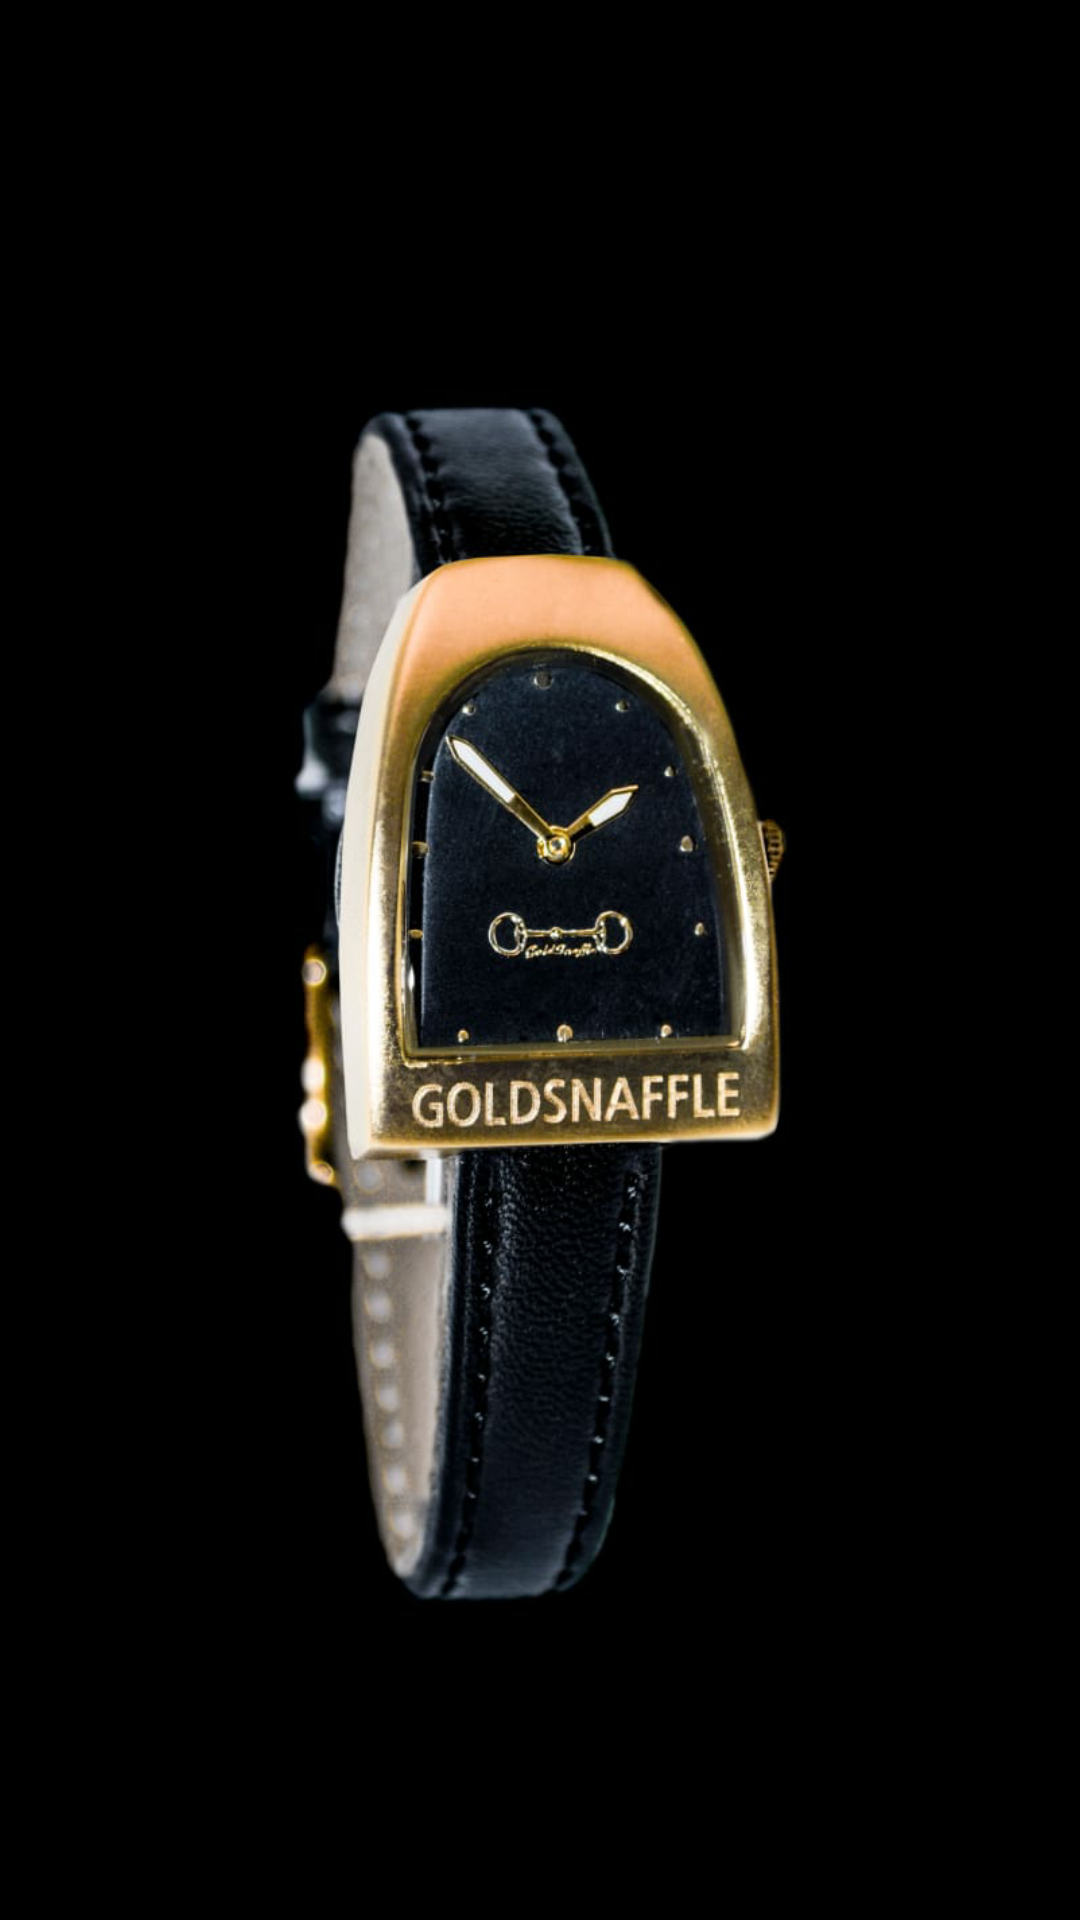 Stunning laser plated stirrup watches - watch - GoldSnaffle